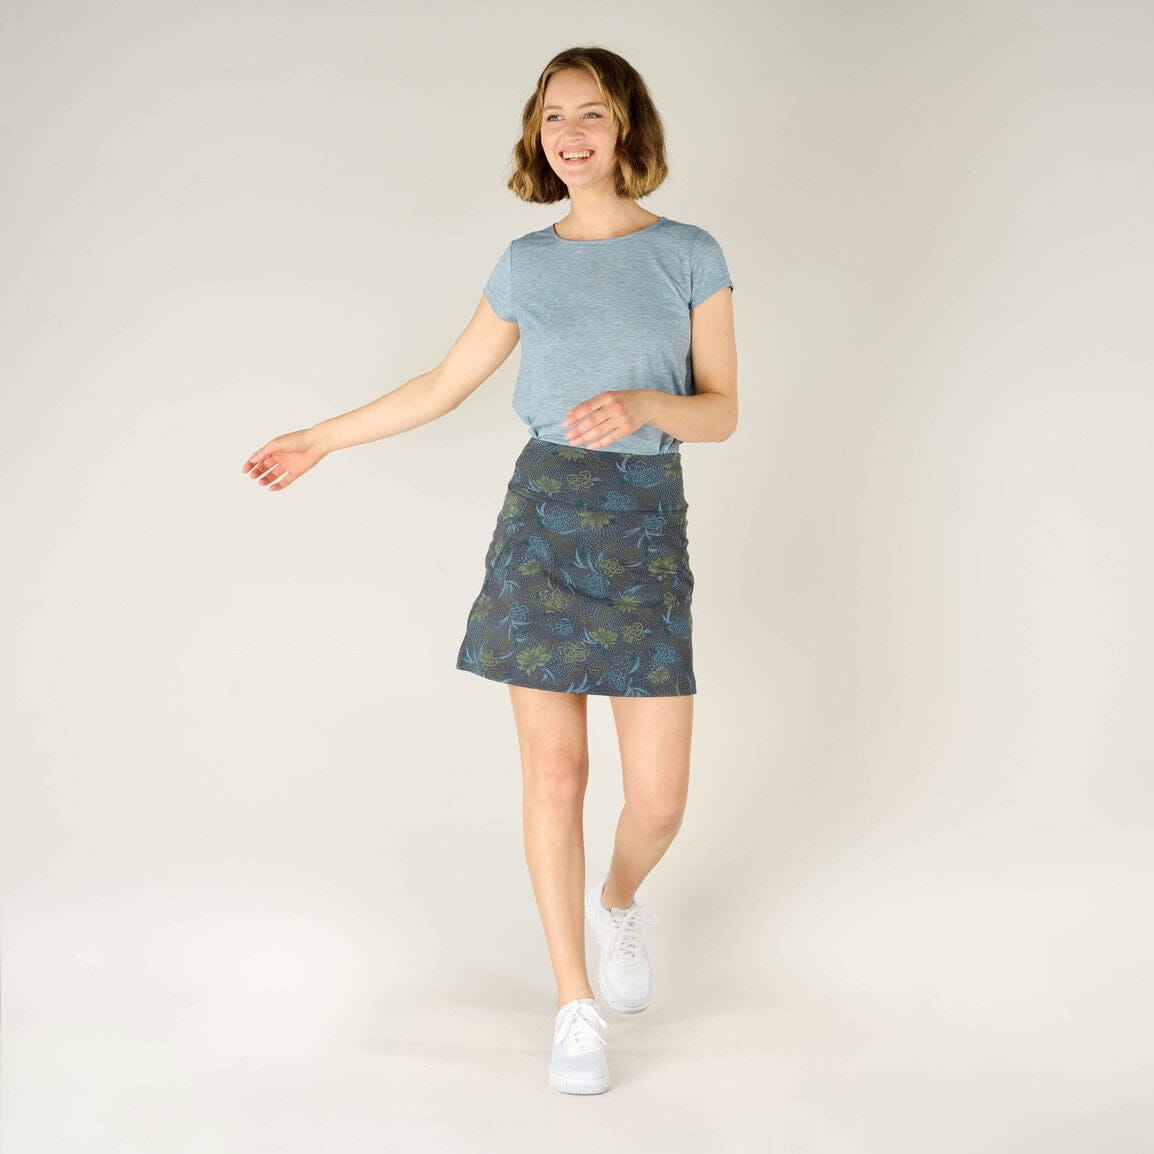 Sherpa W's Nisha Skort - Recycled polyester Haze Floral Skirt